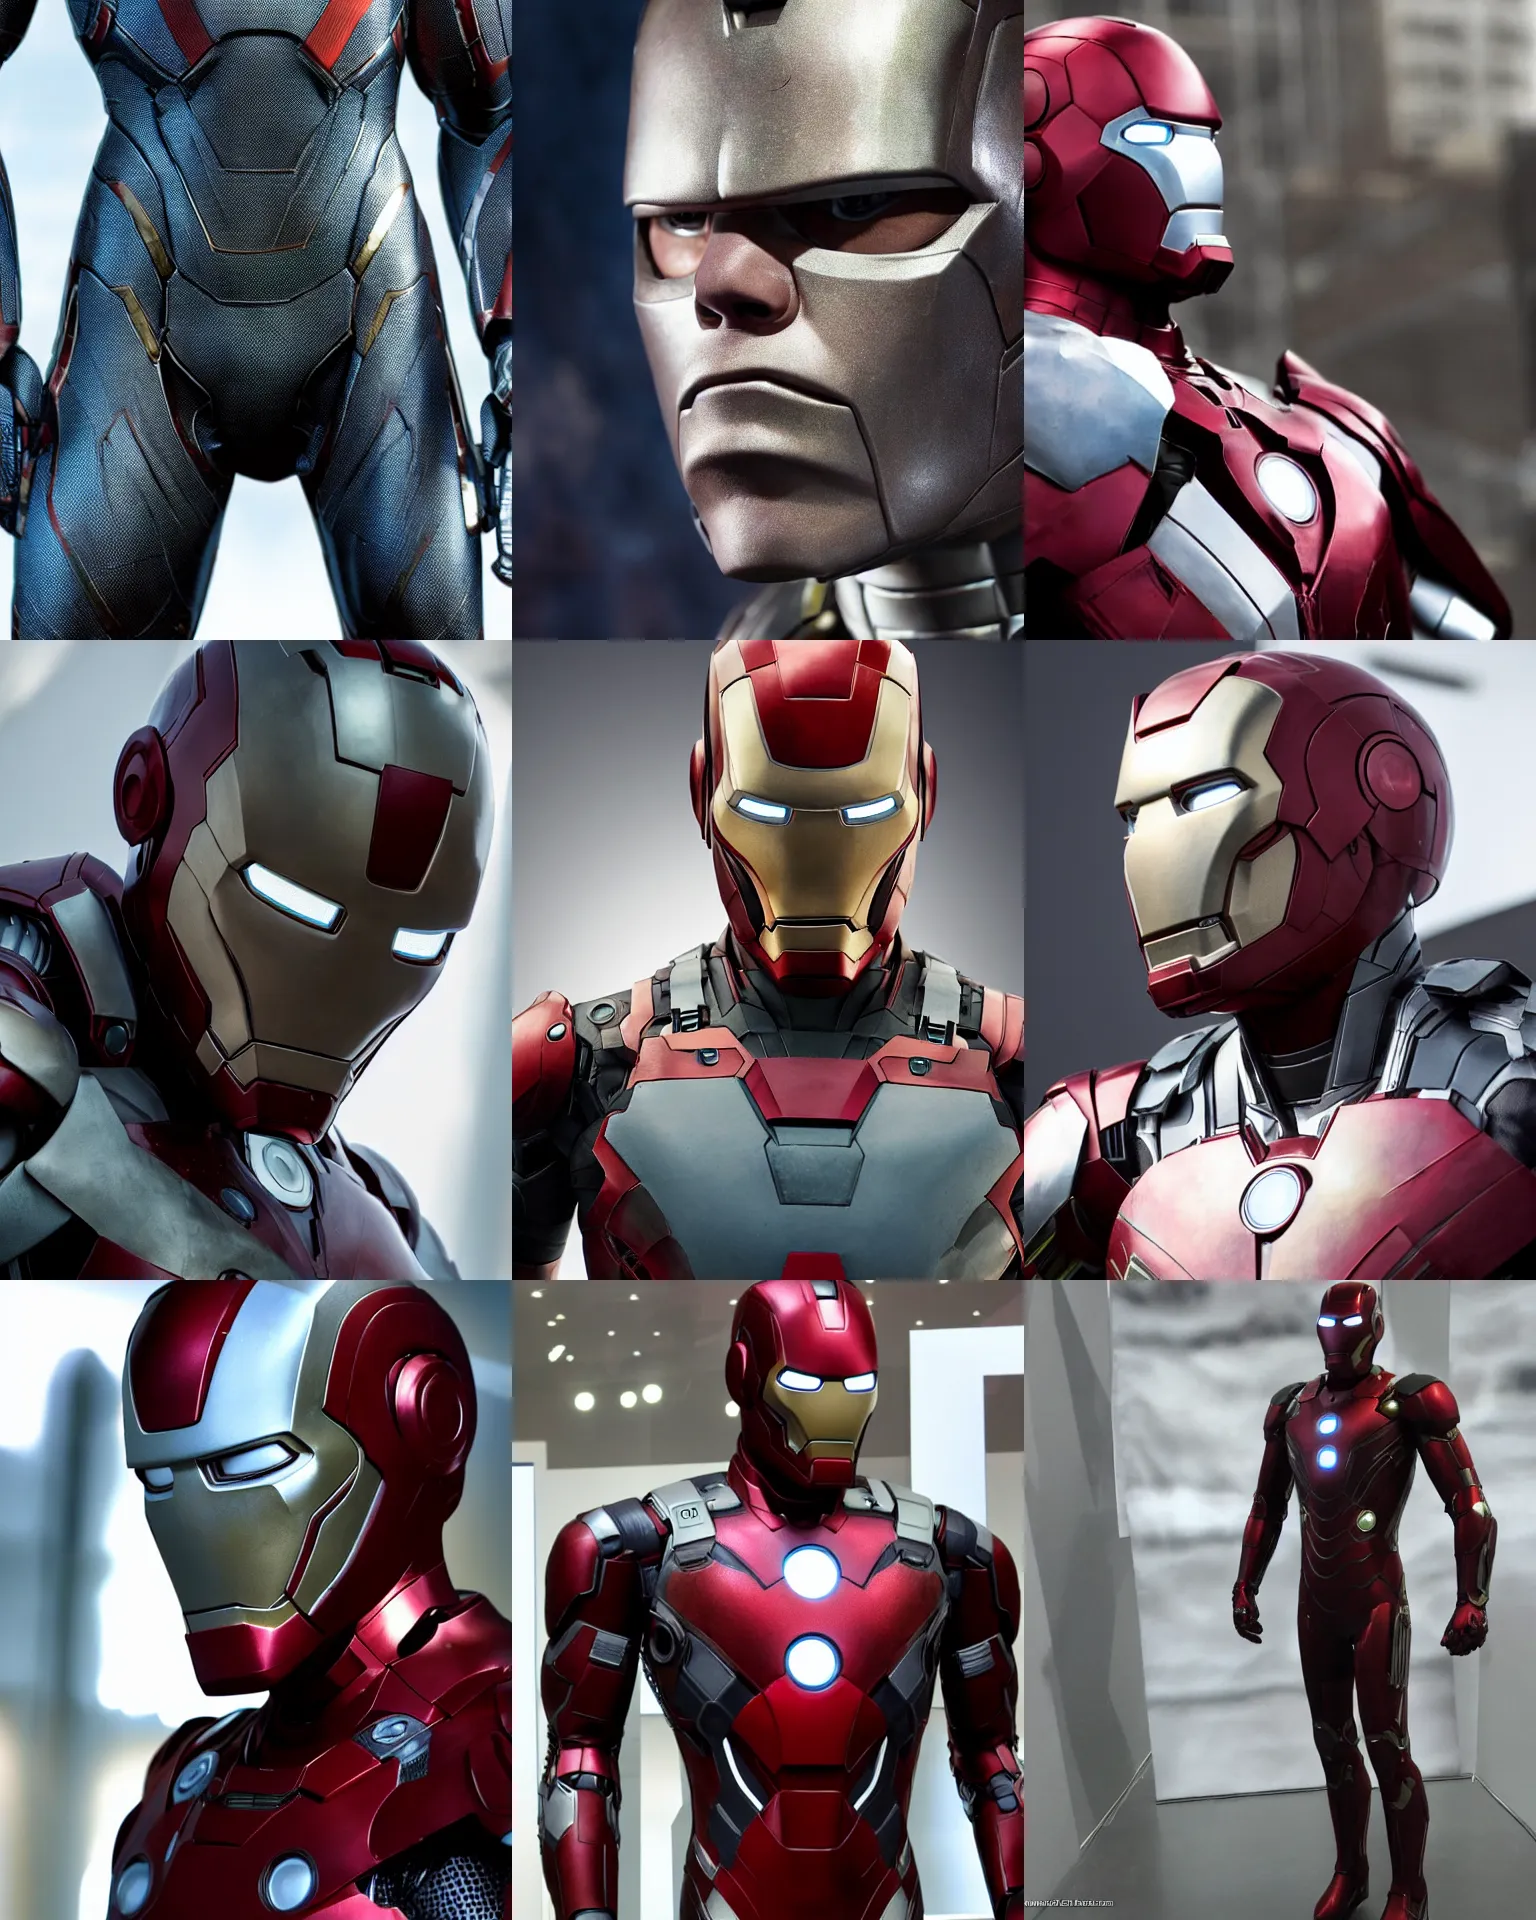 Prompt: matt damon ironman suit very realistic medium shot close up from the avengers